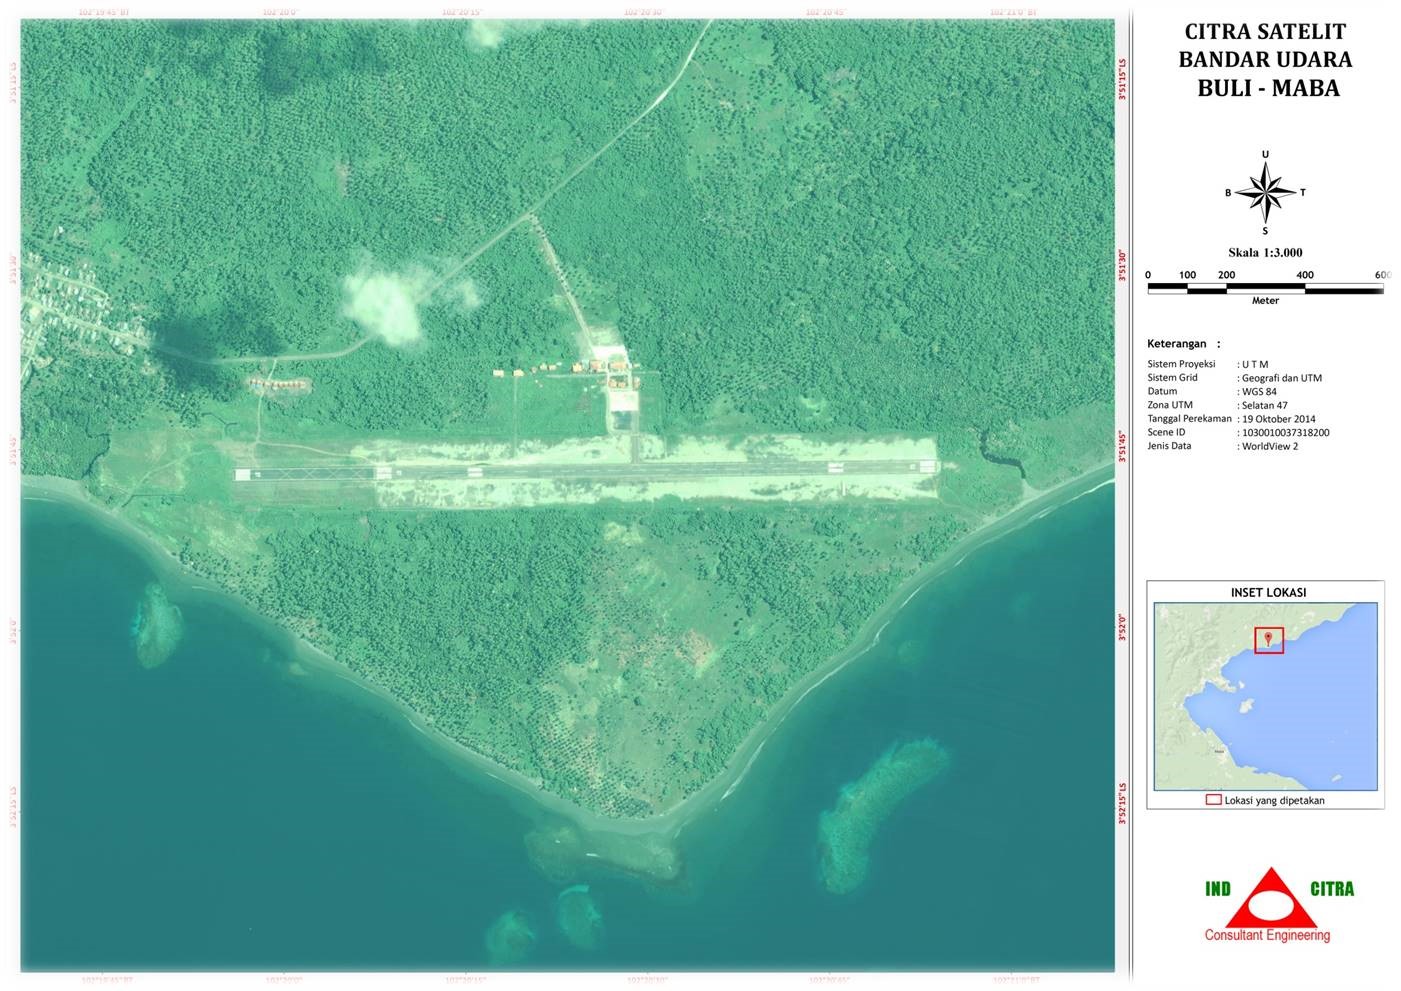 Gambar Peta Bandara Peta Bandara Buli dilihat dari citra satelit
